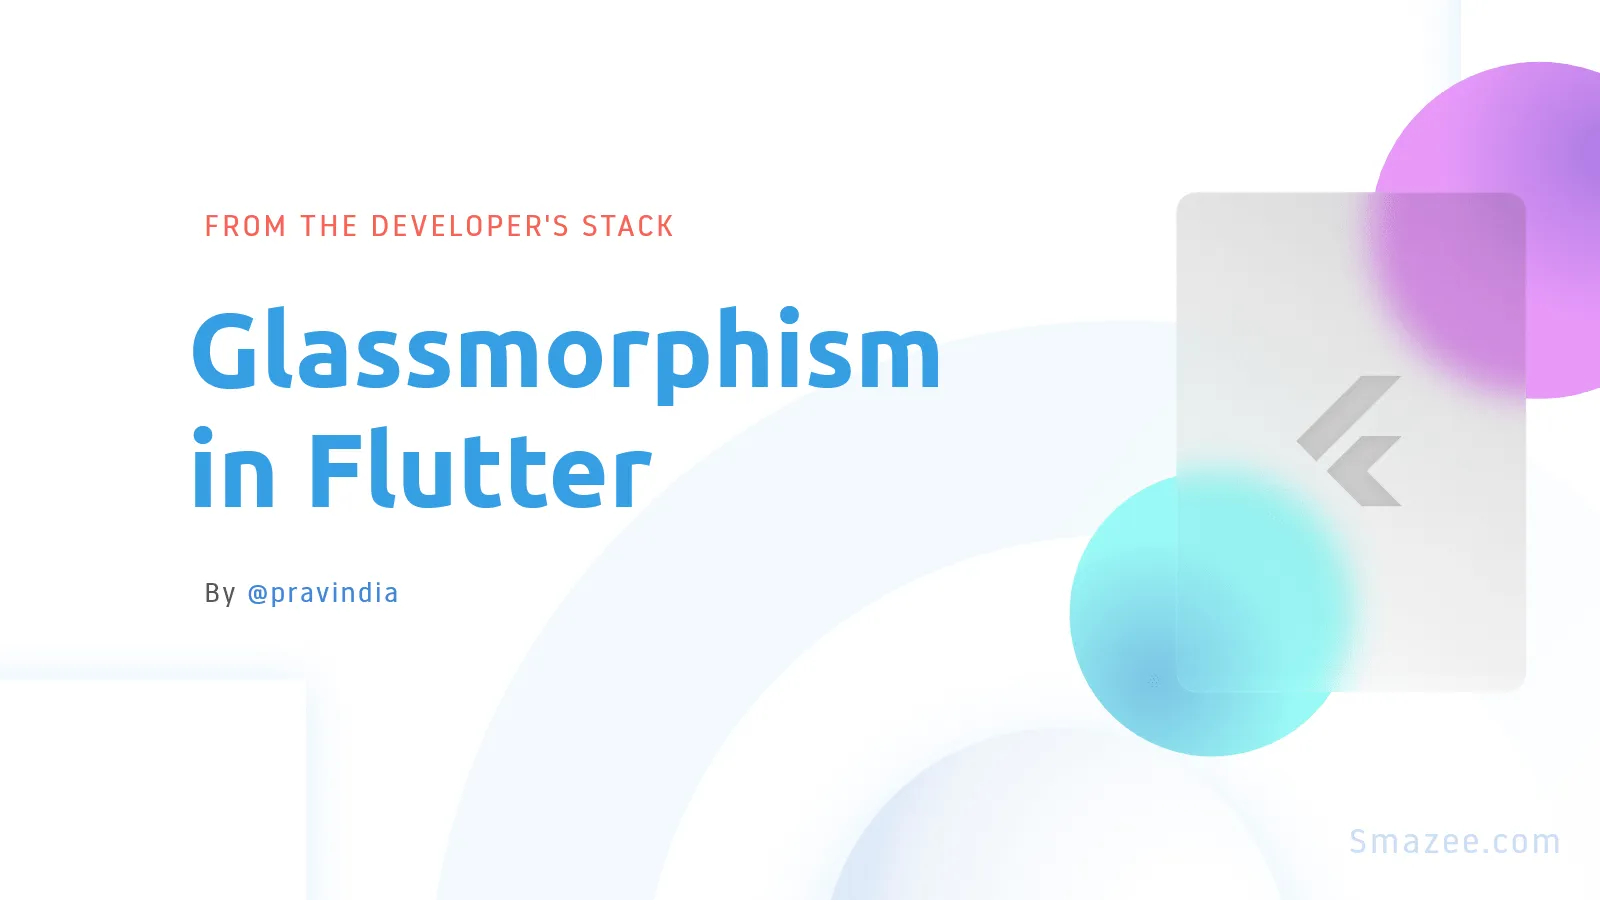 Implement glassmorphism in your flutter app